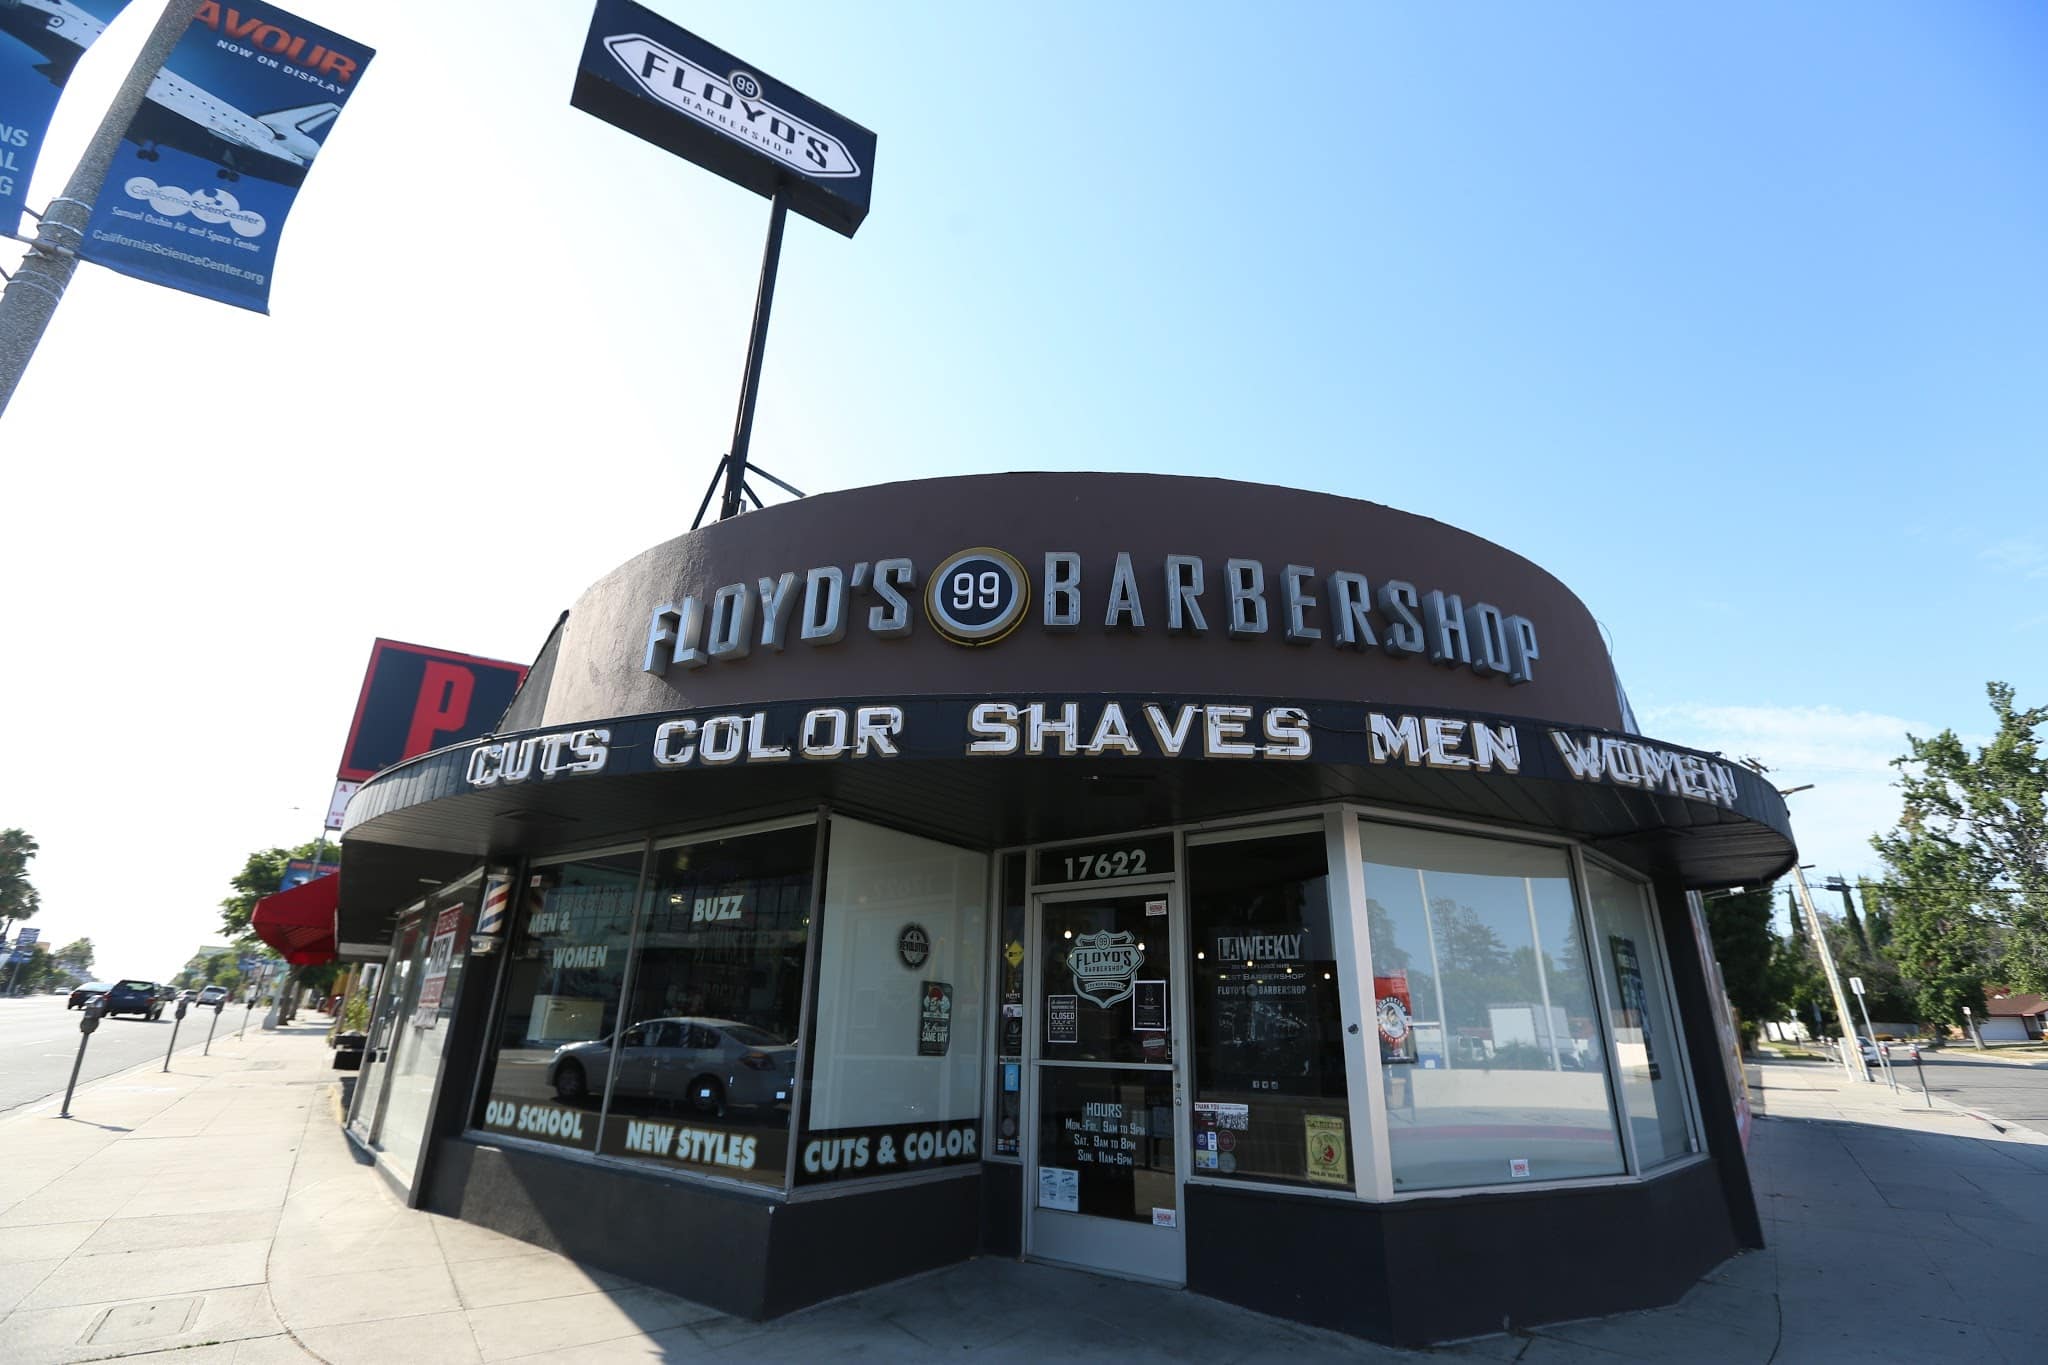 Floyd’s 99 Barbershop - Encino (CA 91316), US, barber open near me